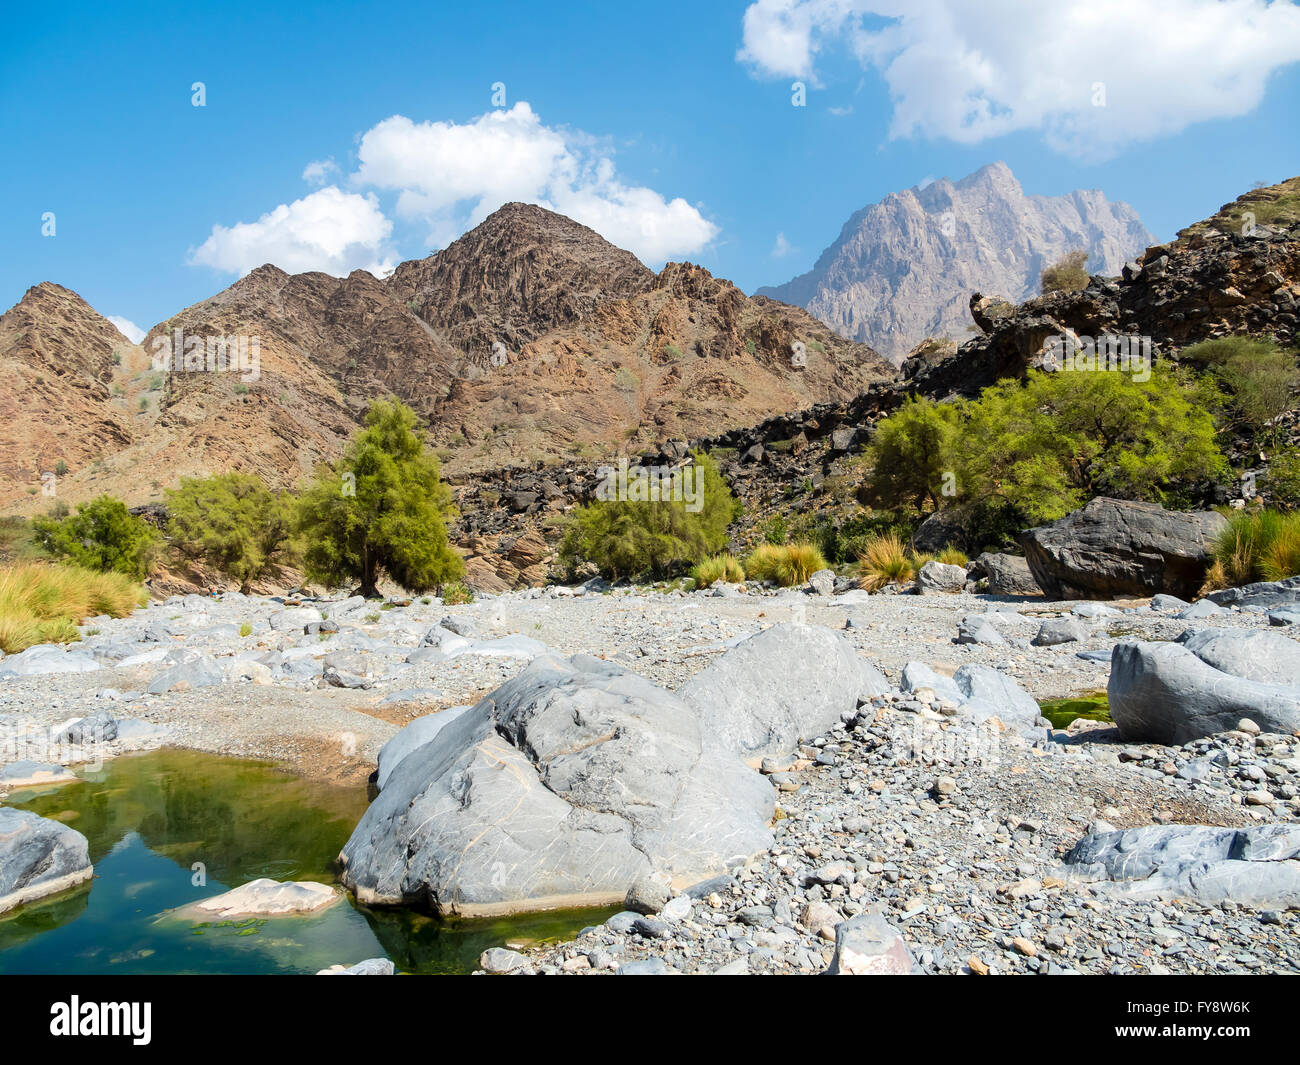 Oman, Al Hajar Mountains, Wadi, dried river course Stock Photo